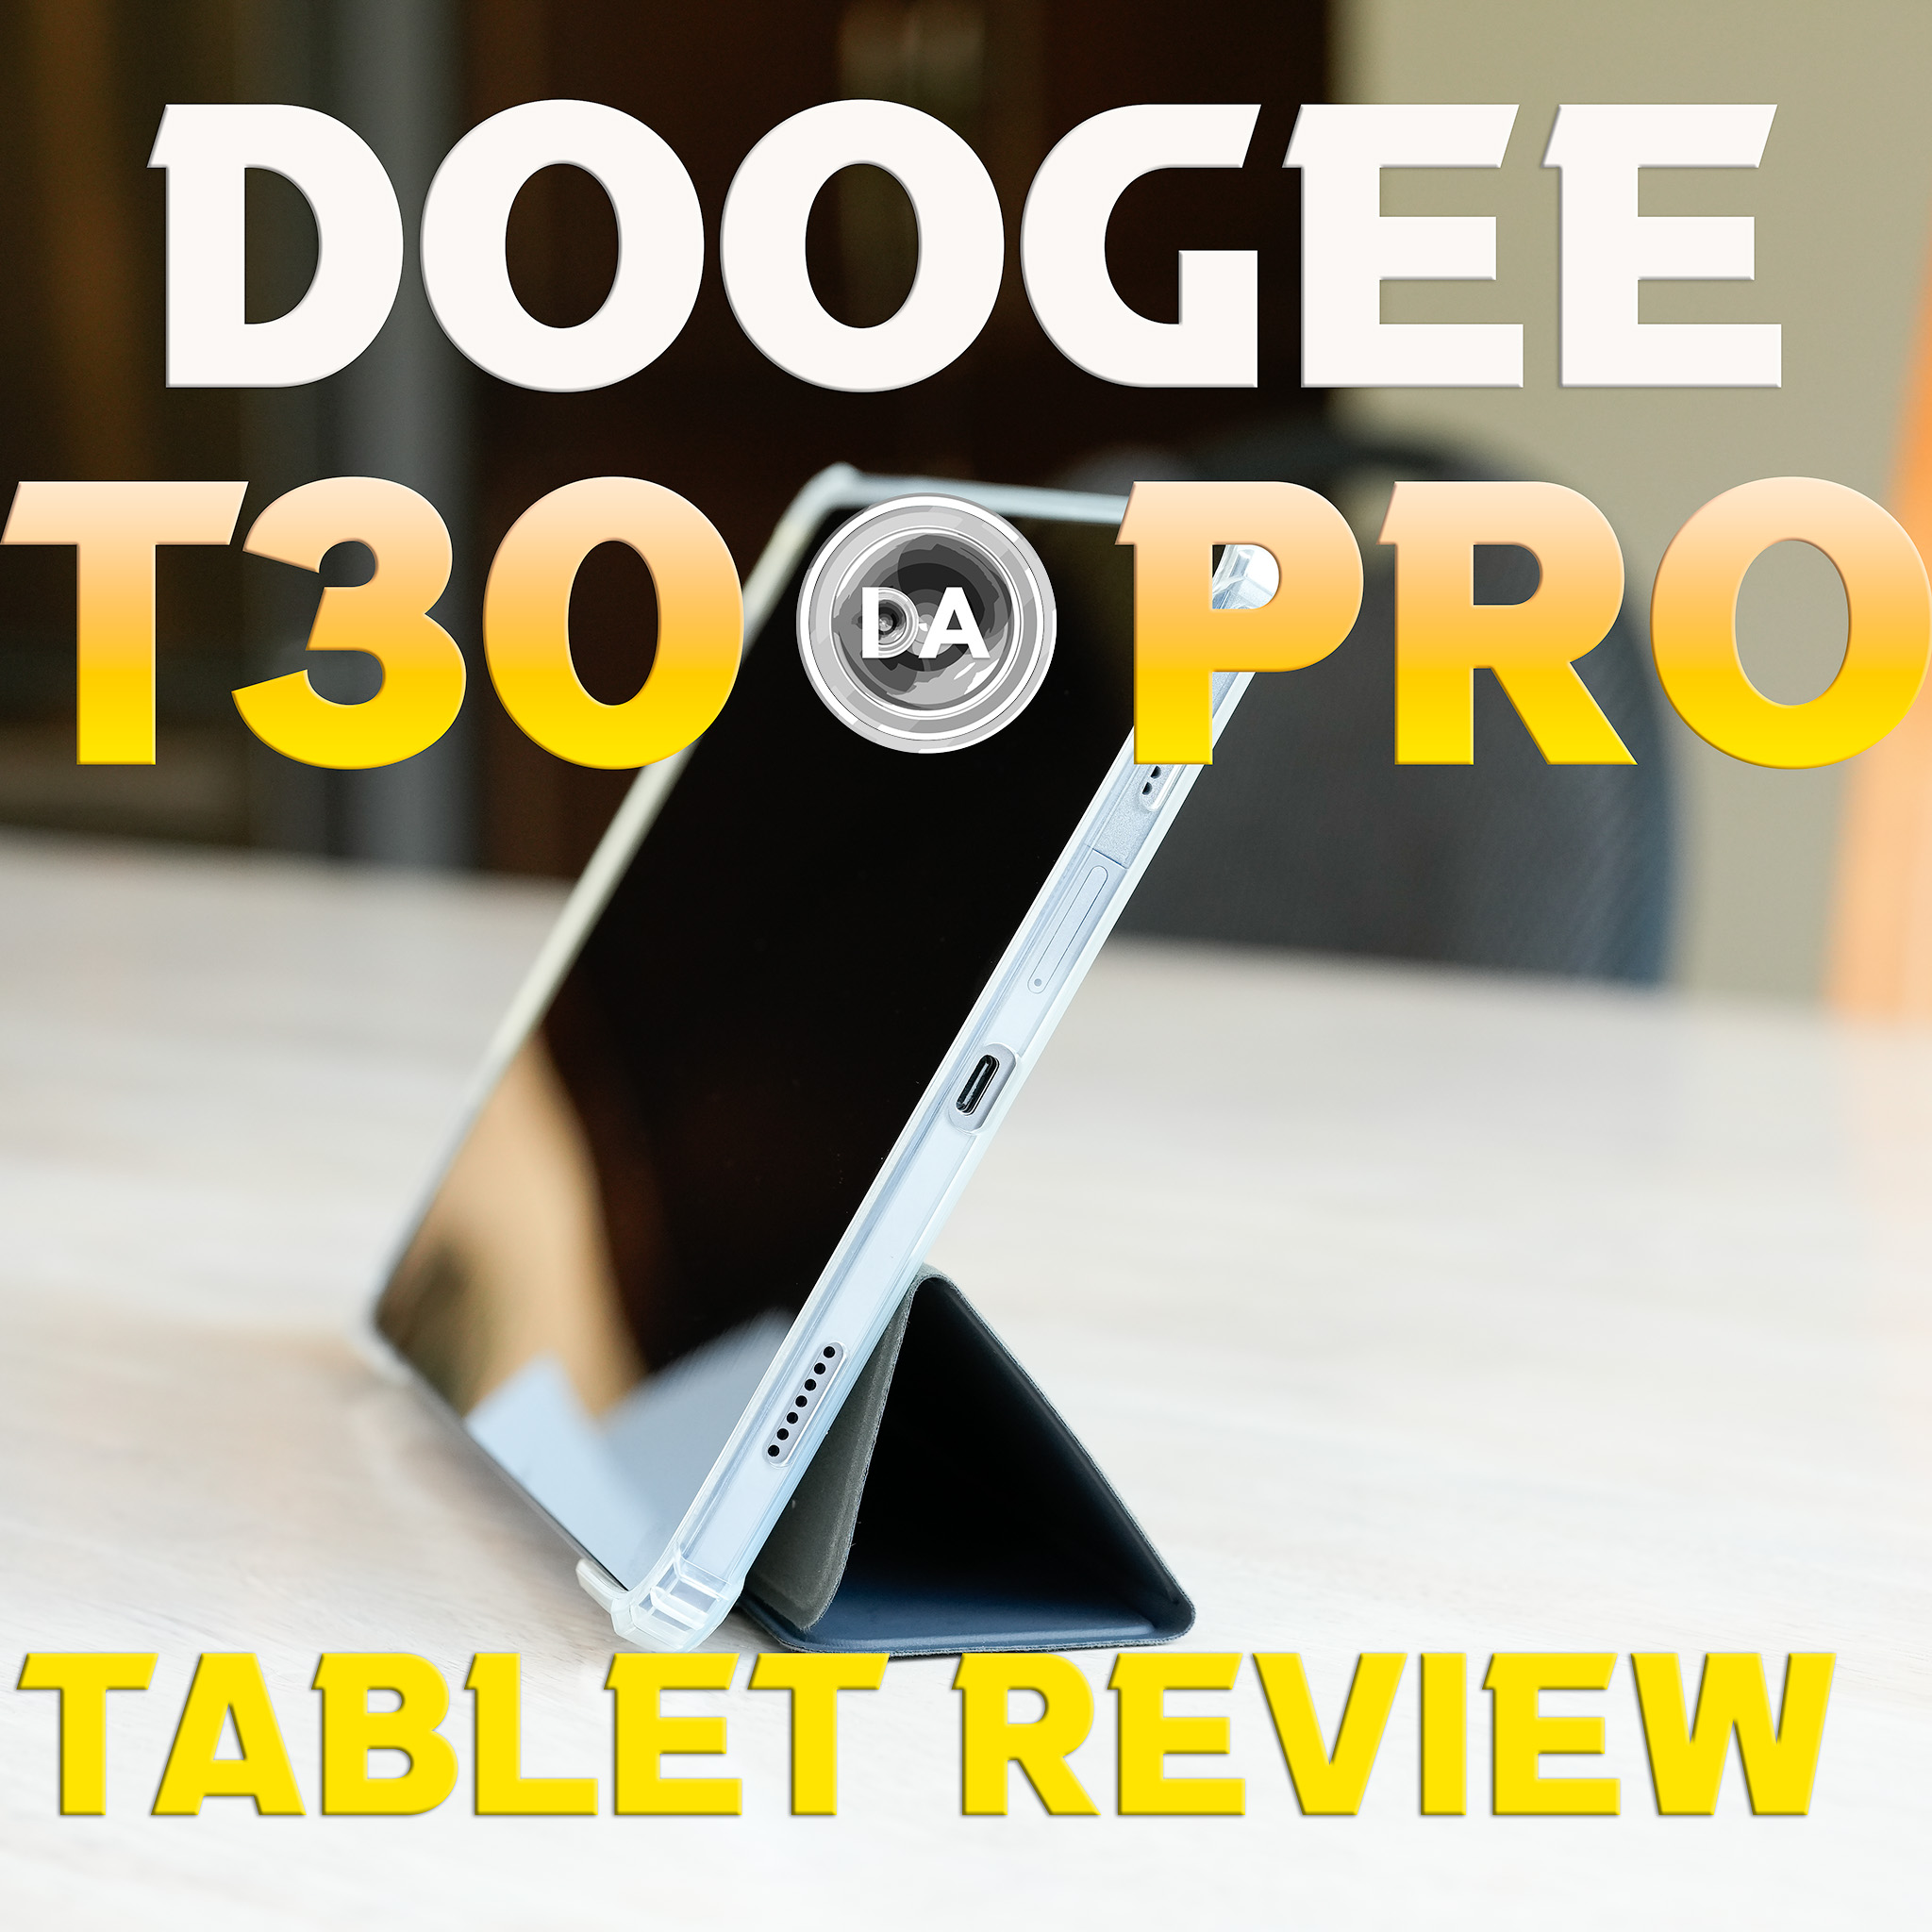 Doogee T30 Pro - Specifications